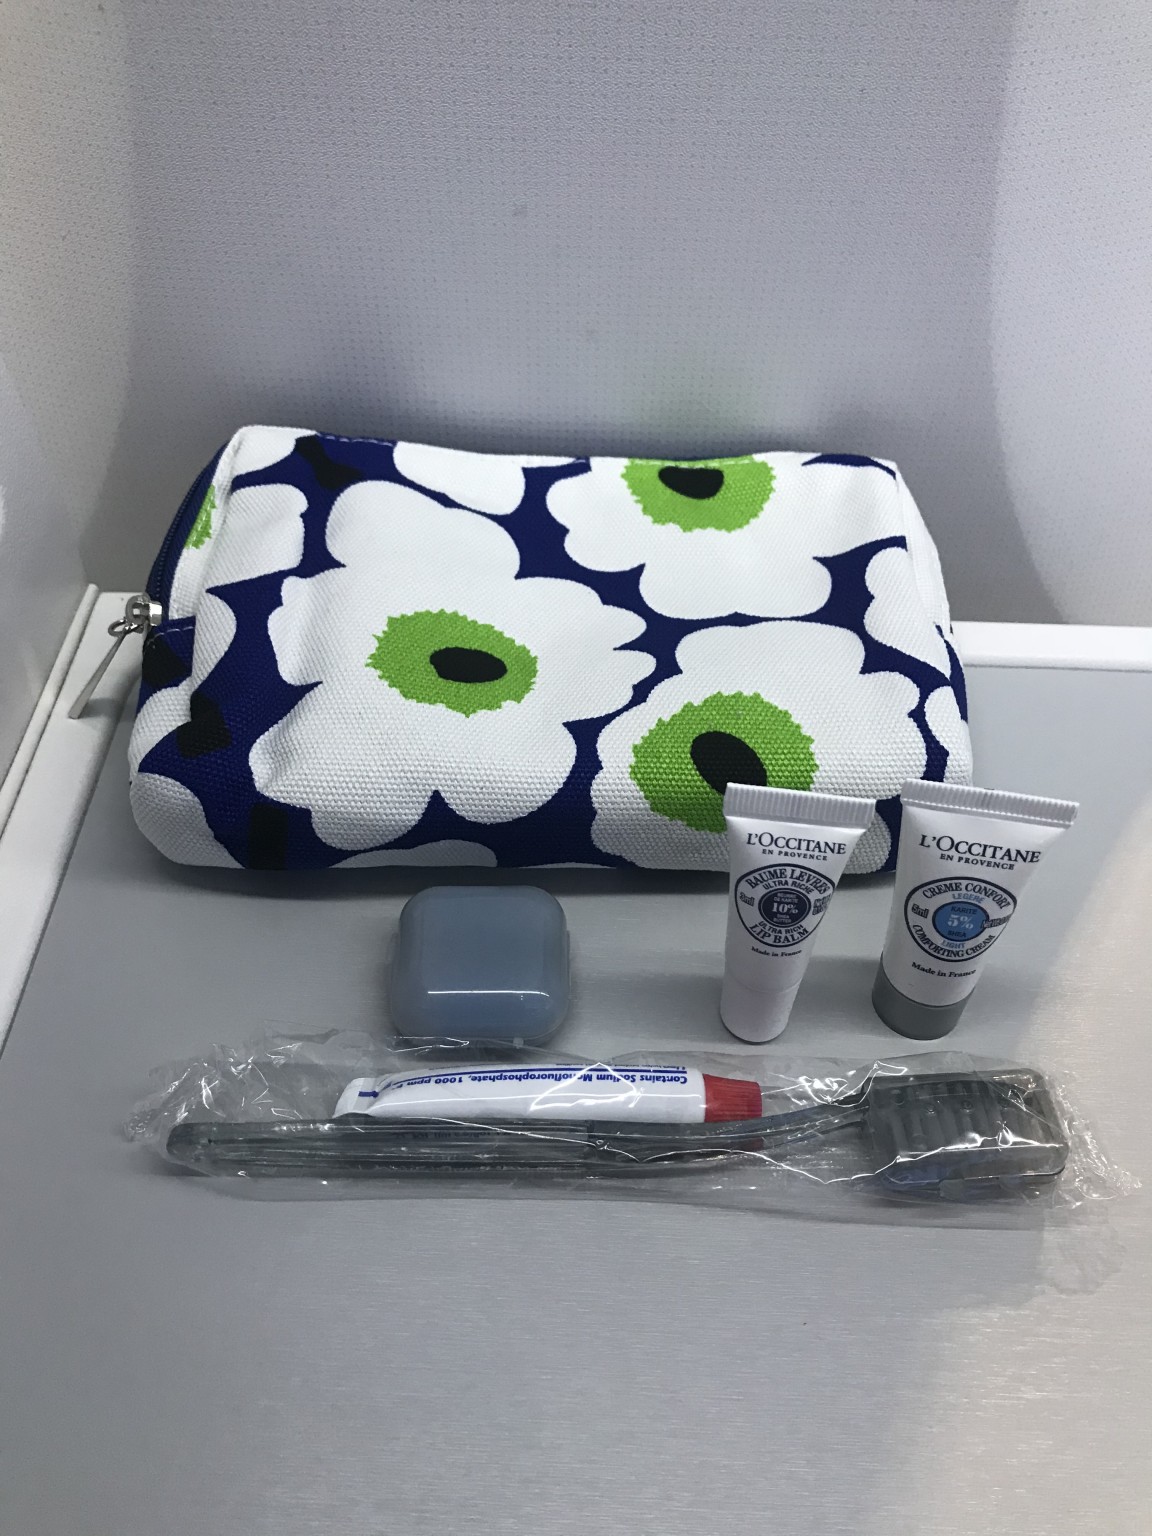 Amenities on board Finnair AY131 business class